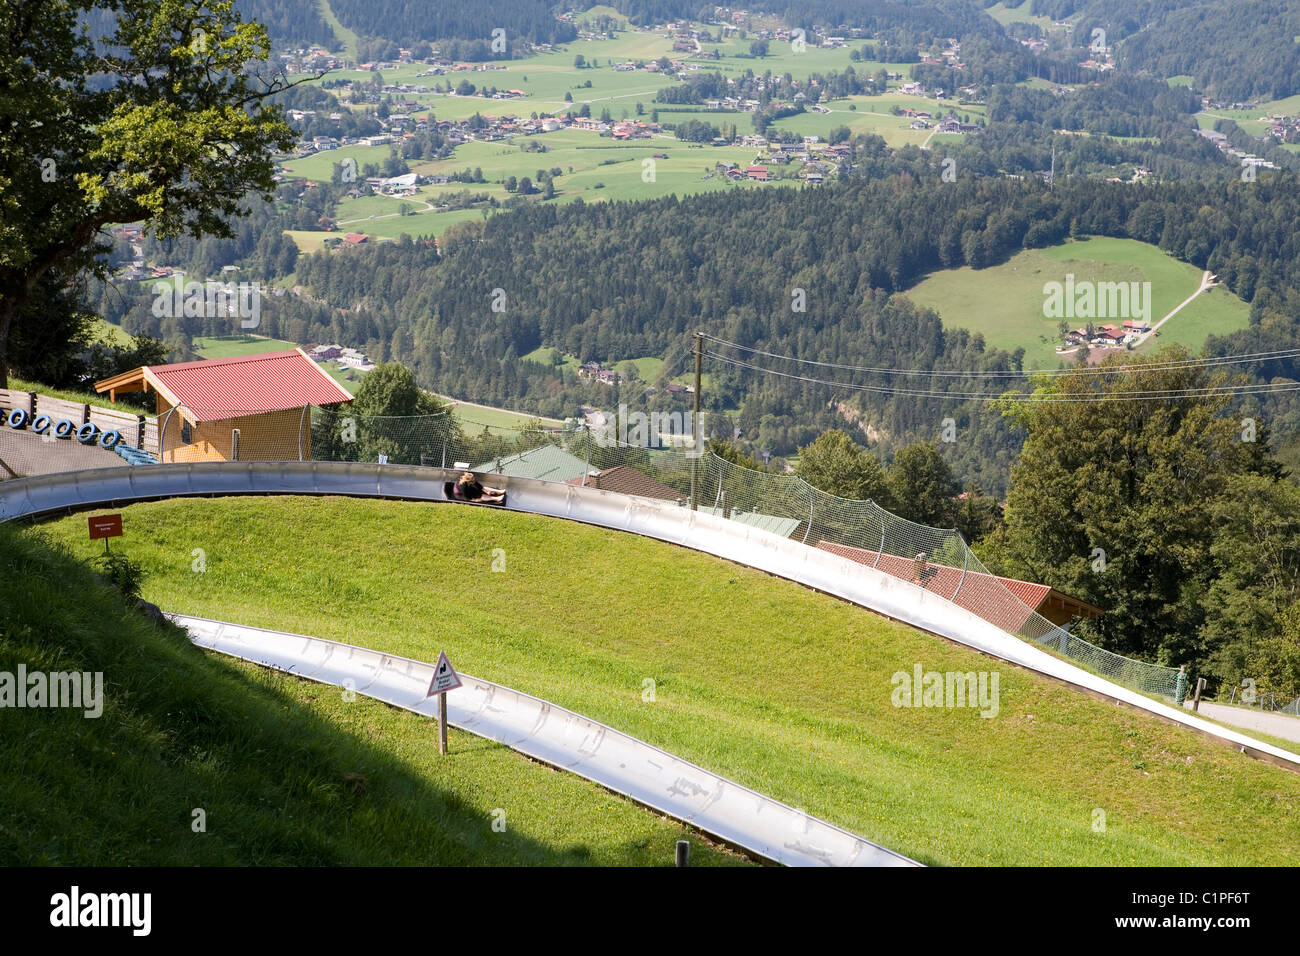 Germany, Berchtesgaden, Hochlenzer, luge track in summer Stock Photo